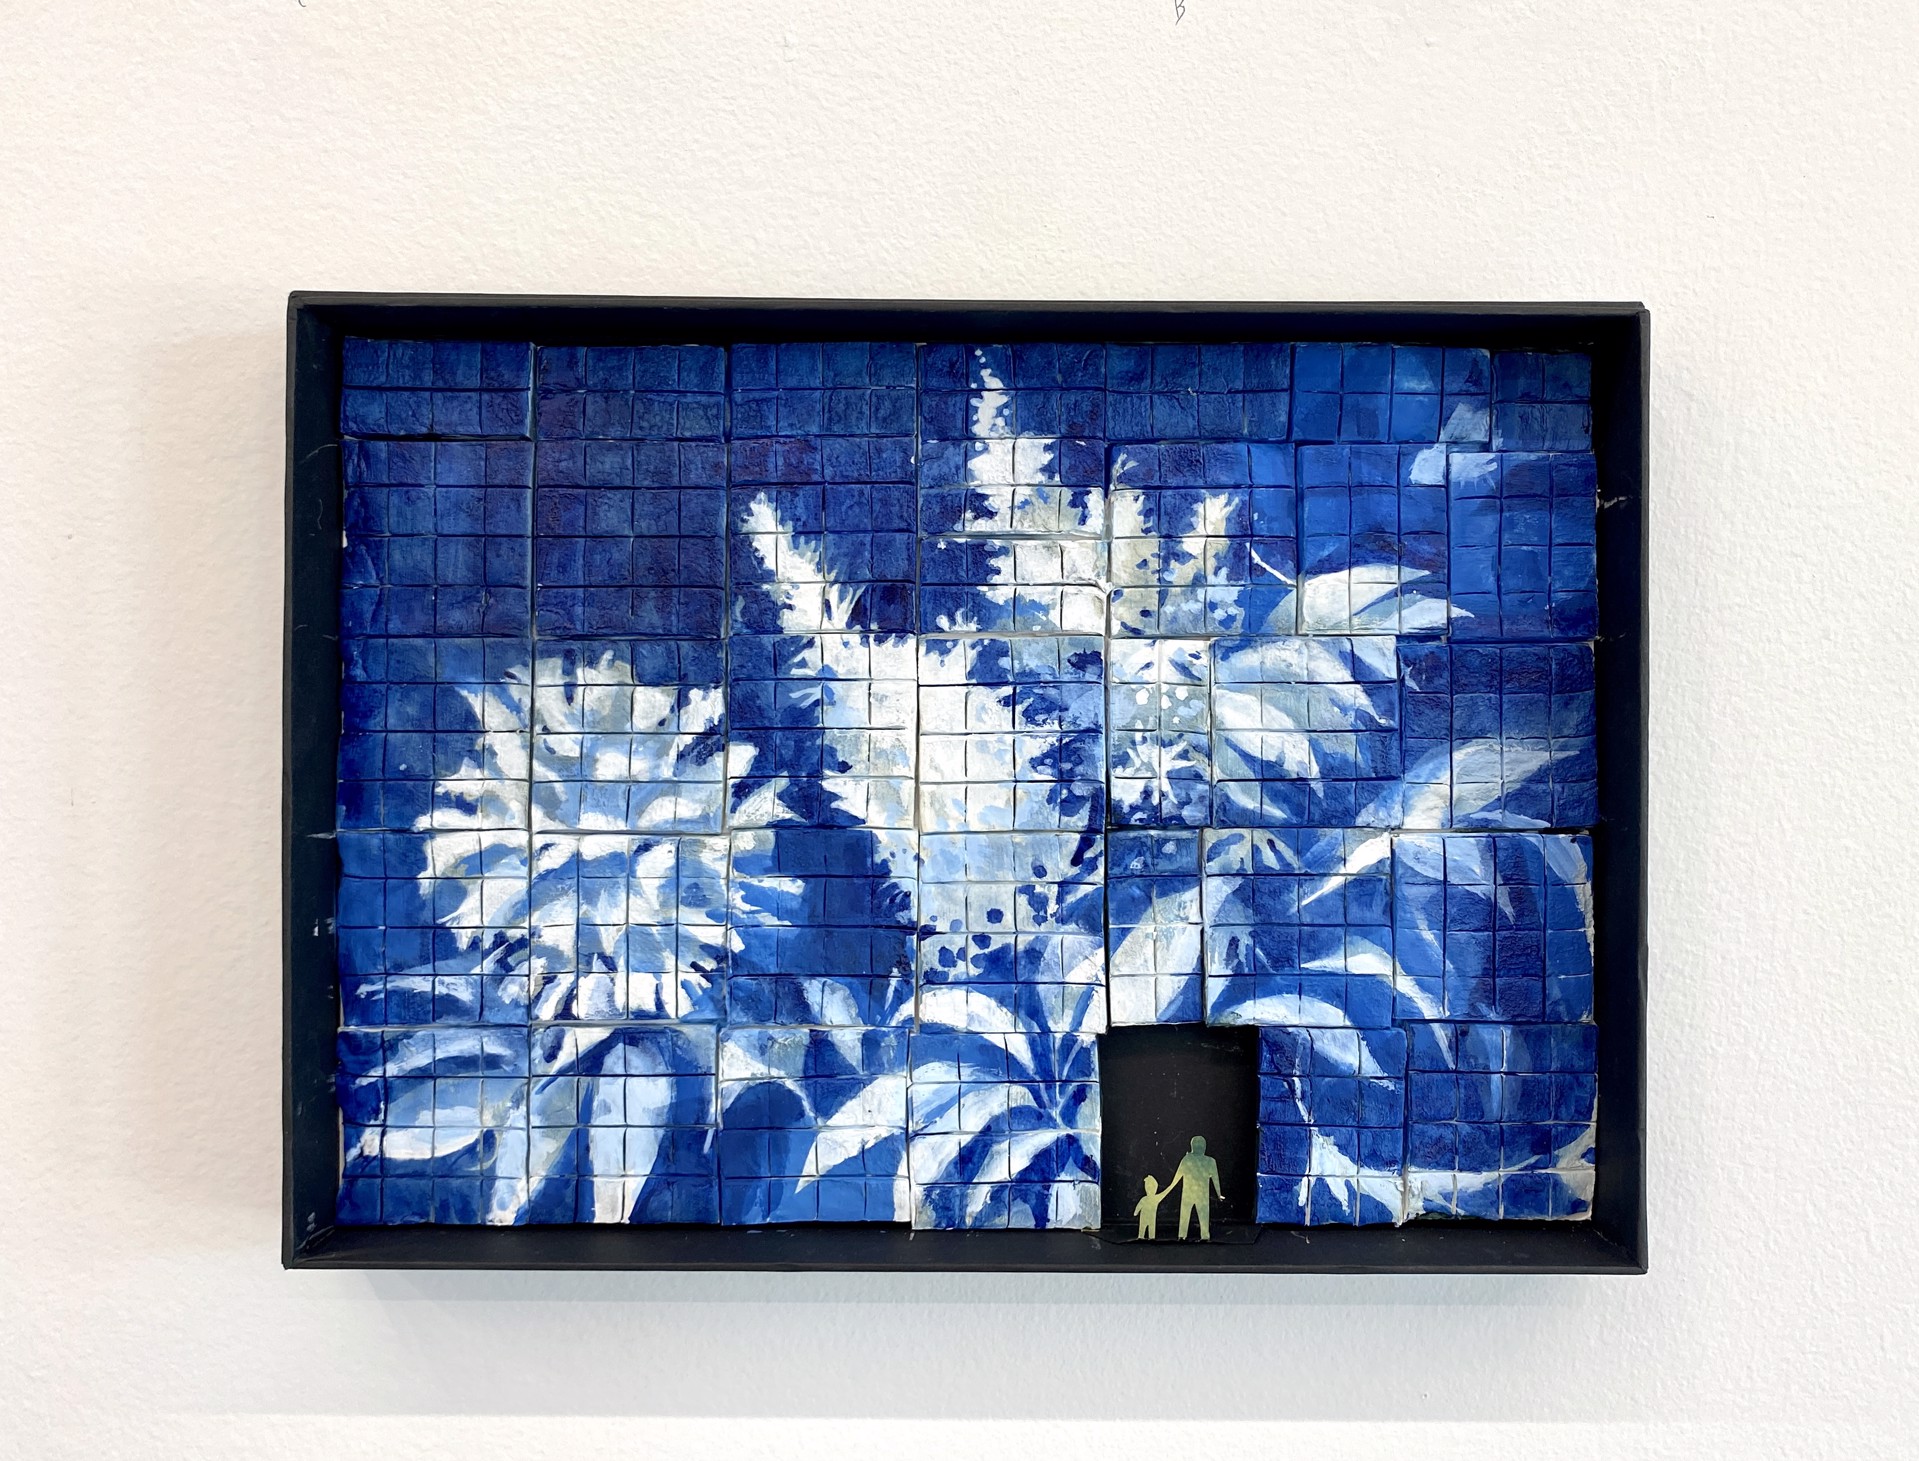 Dutch Tile Wall Imagined by Rachel Wolfson Smith